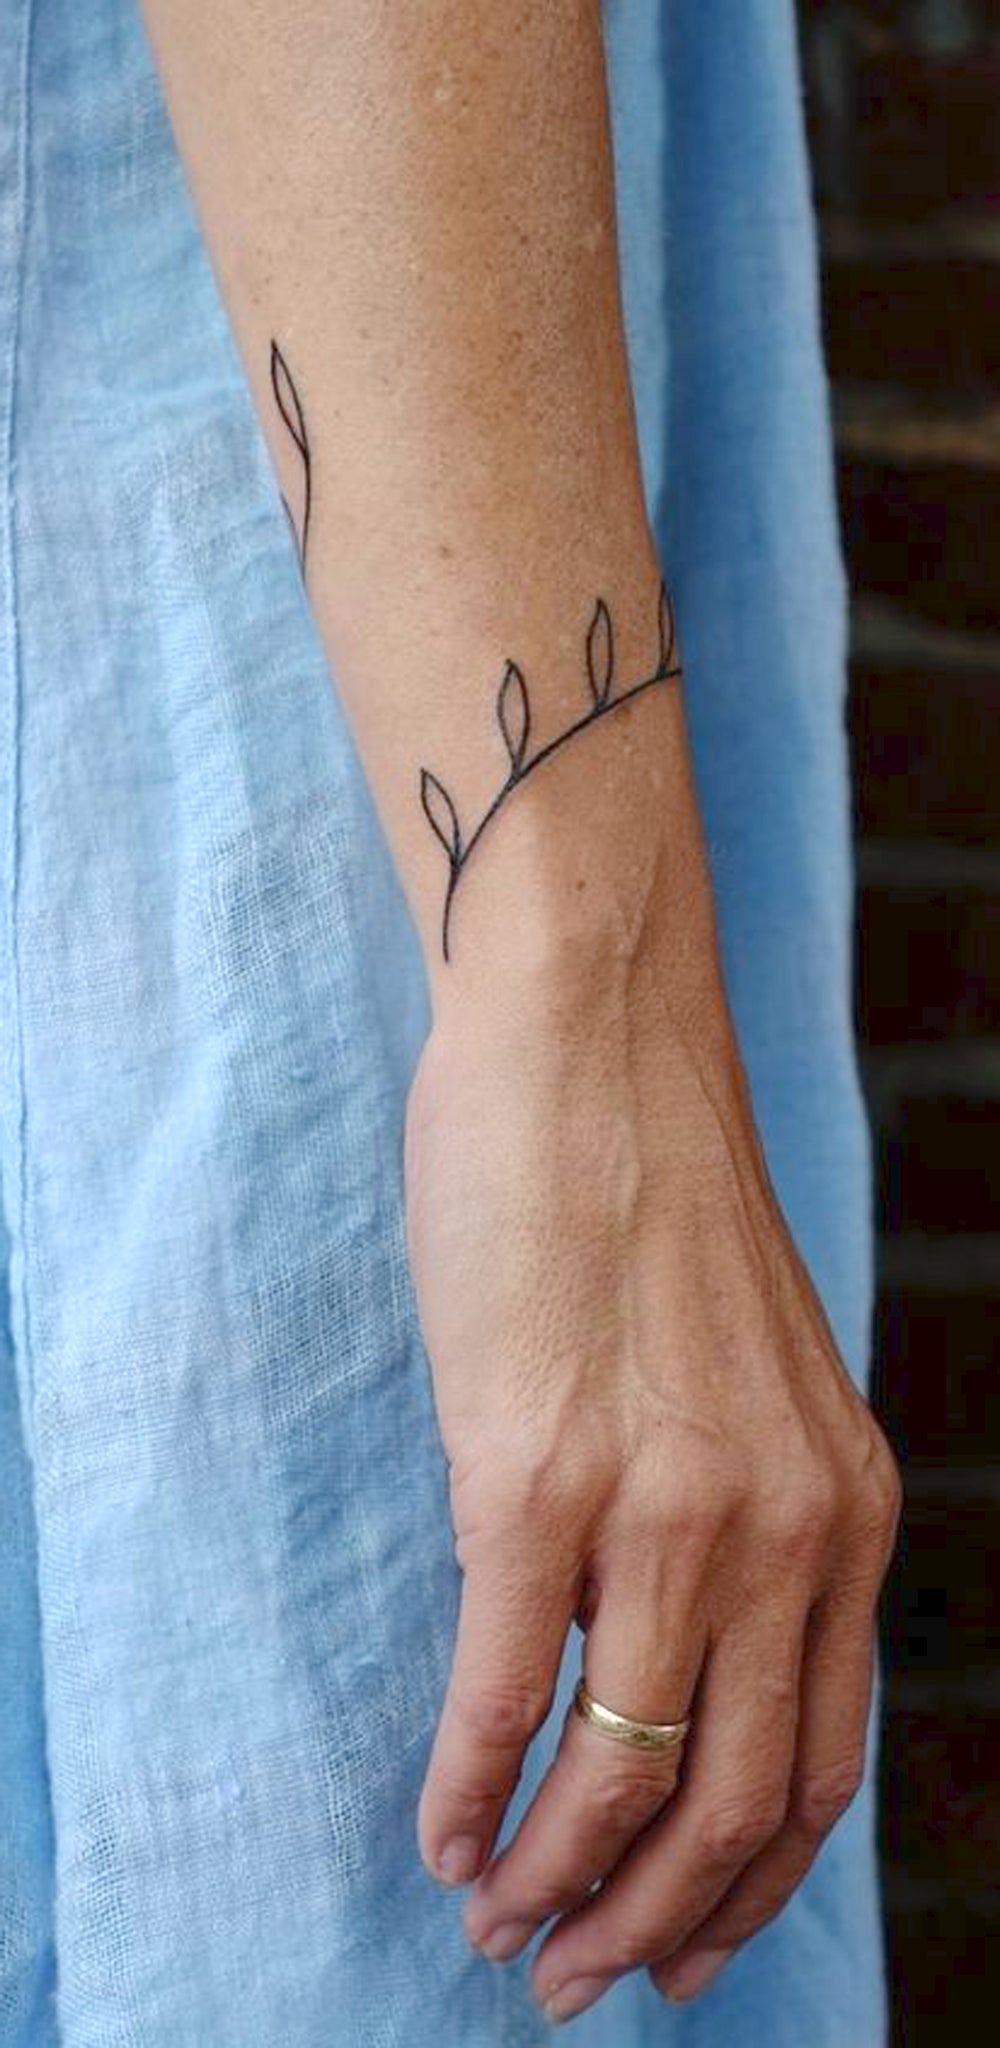 Simple Small Nature Tattoo Ideas that are Indie and Boho Styled - Leaves Wrap Around Arm Bracelet Tatouage - Ideas Del Tatuaje - www.MyBodiArt.com